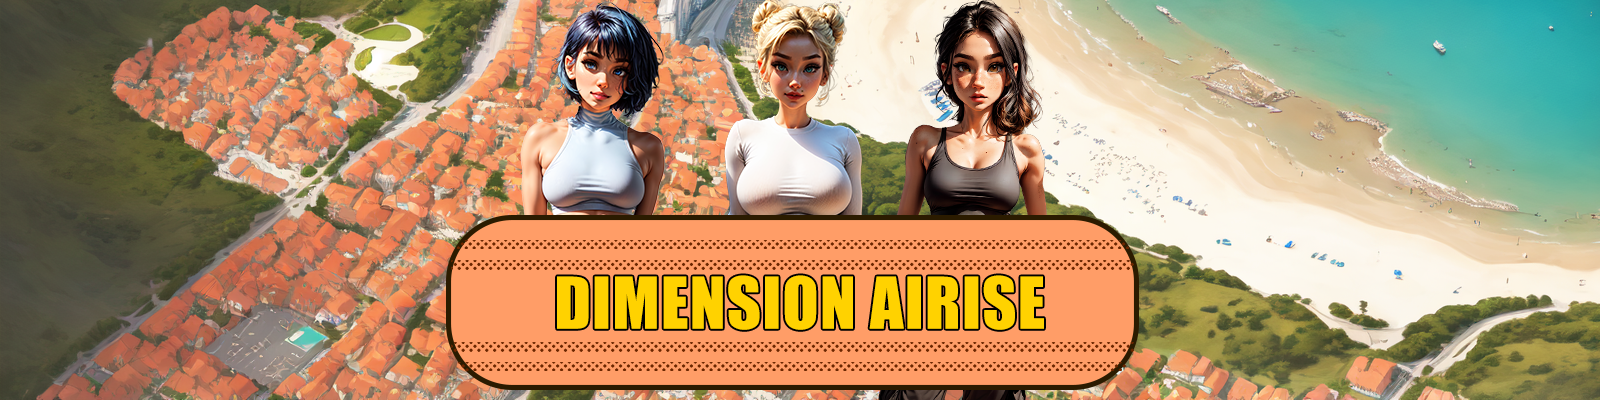 Dimension AIrise poster